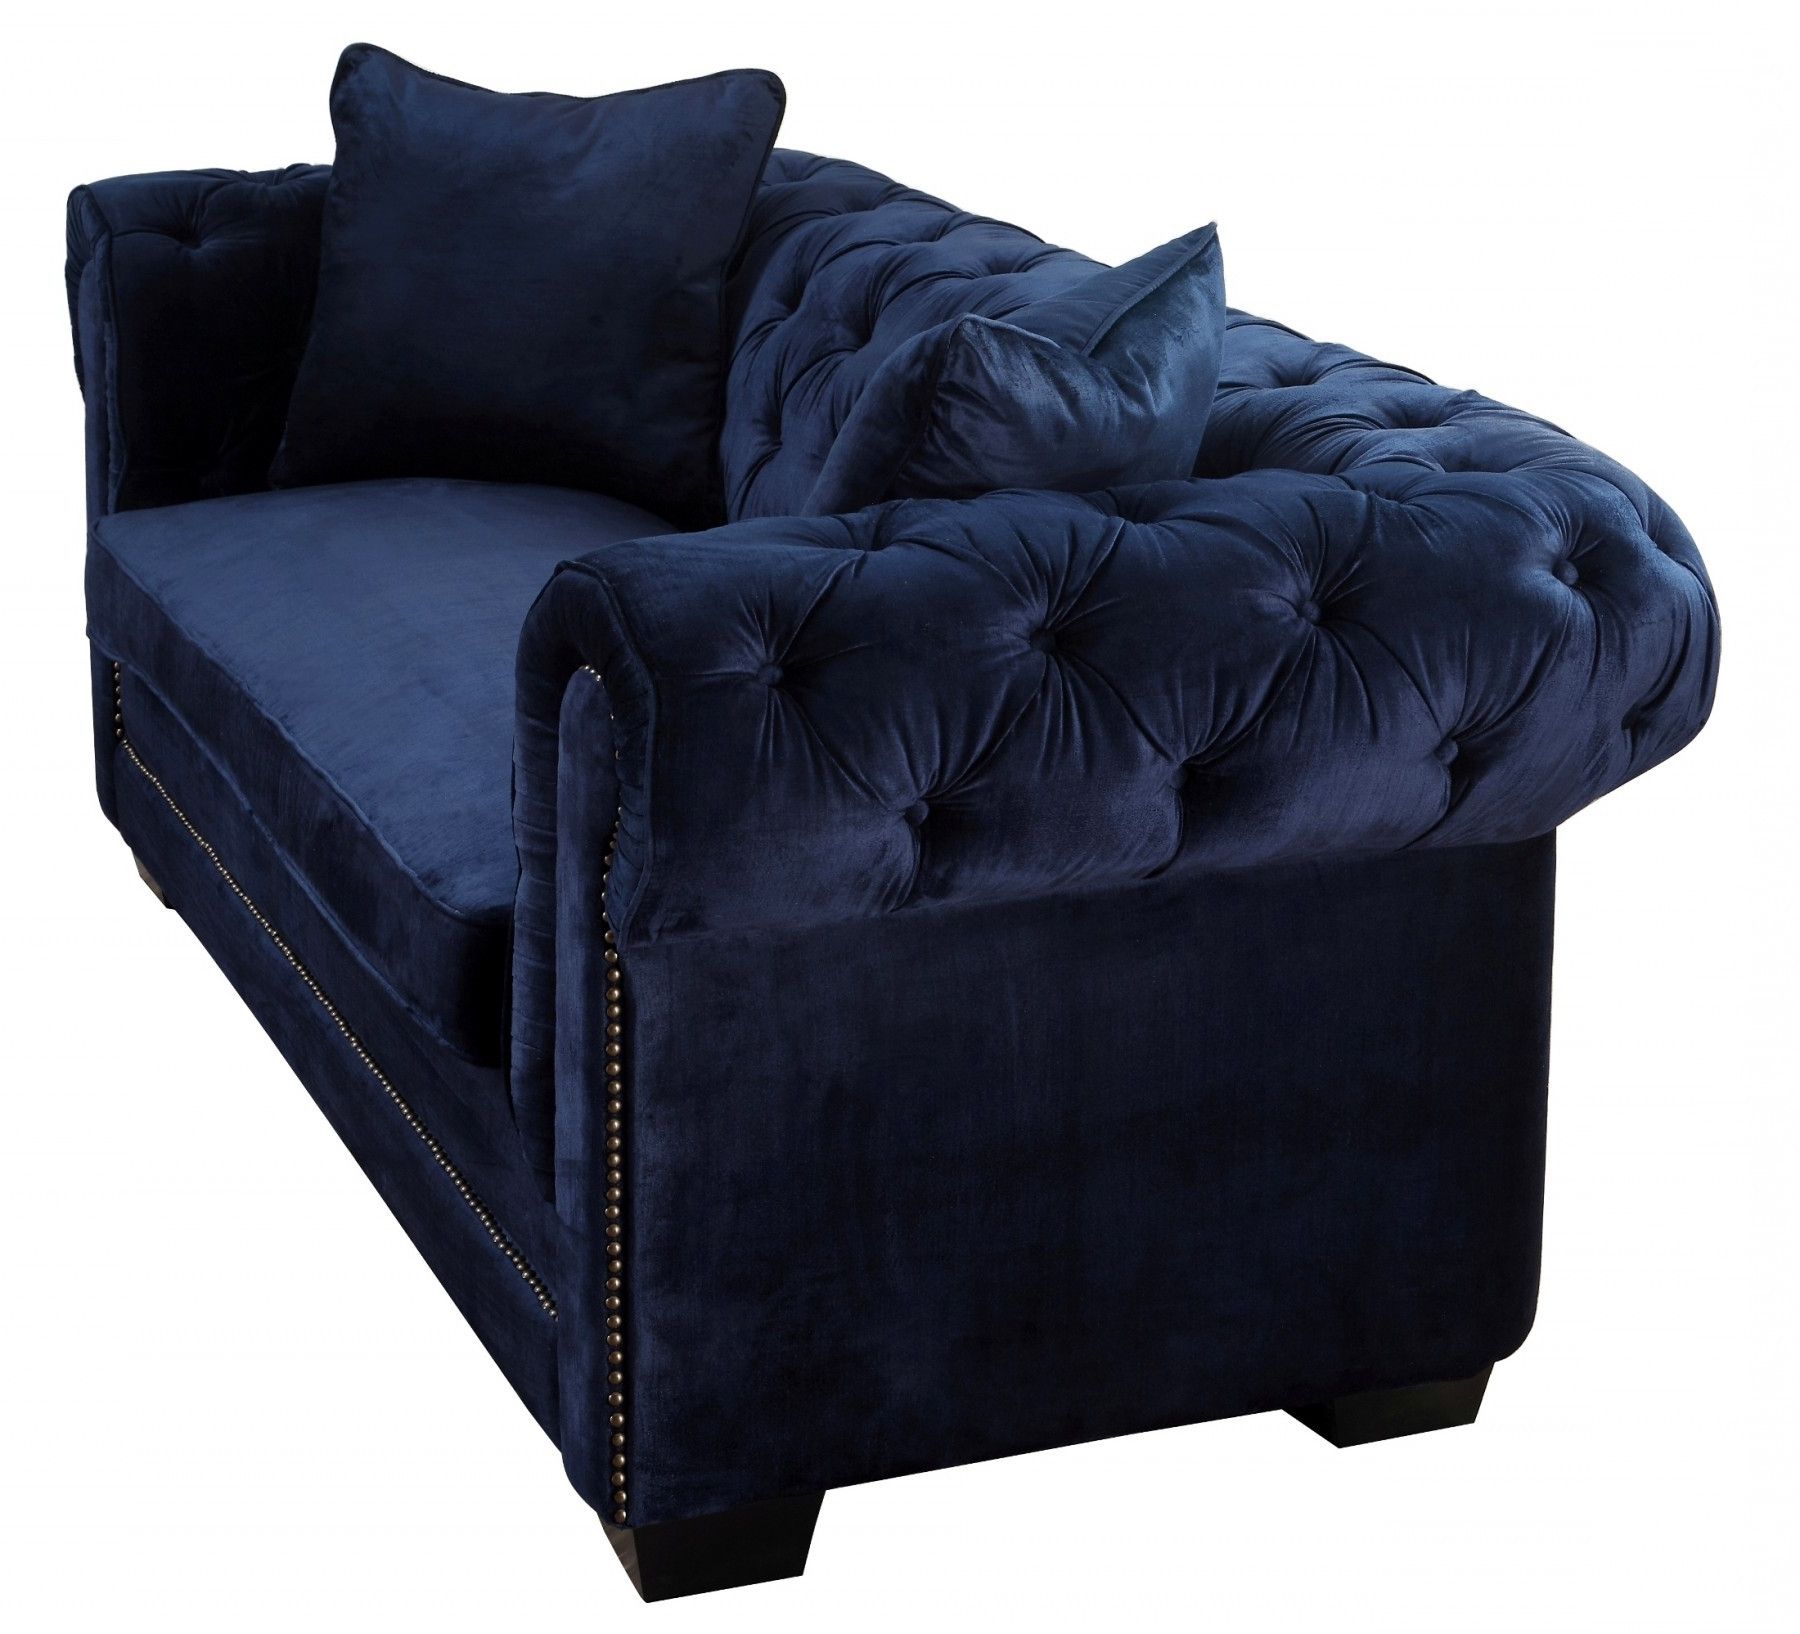 Latest Norwalk Navy Velvet Sofatov Furniture Buy Online At Best Price With Regard To Norwalk Sofas (View 13 of 20)